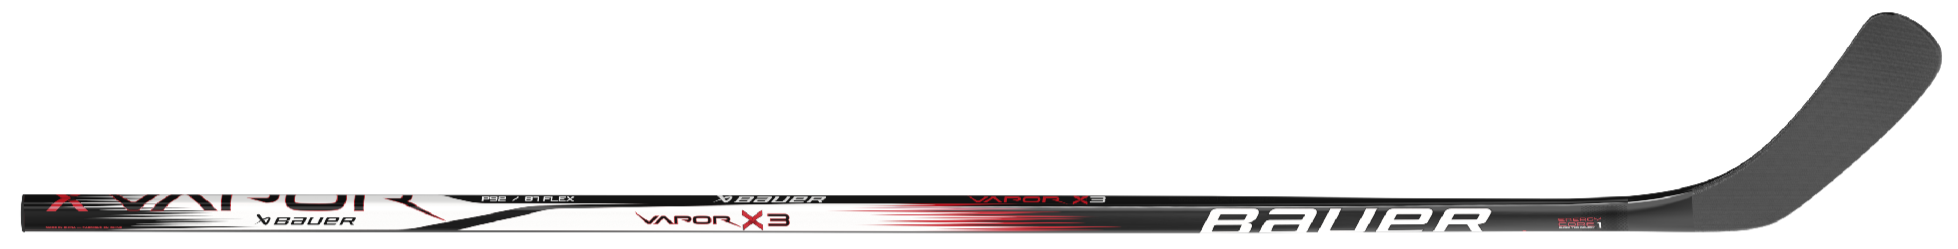 Bauer Vapor X3 Bâton de Hockey Intermédiaire